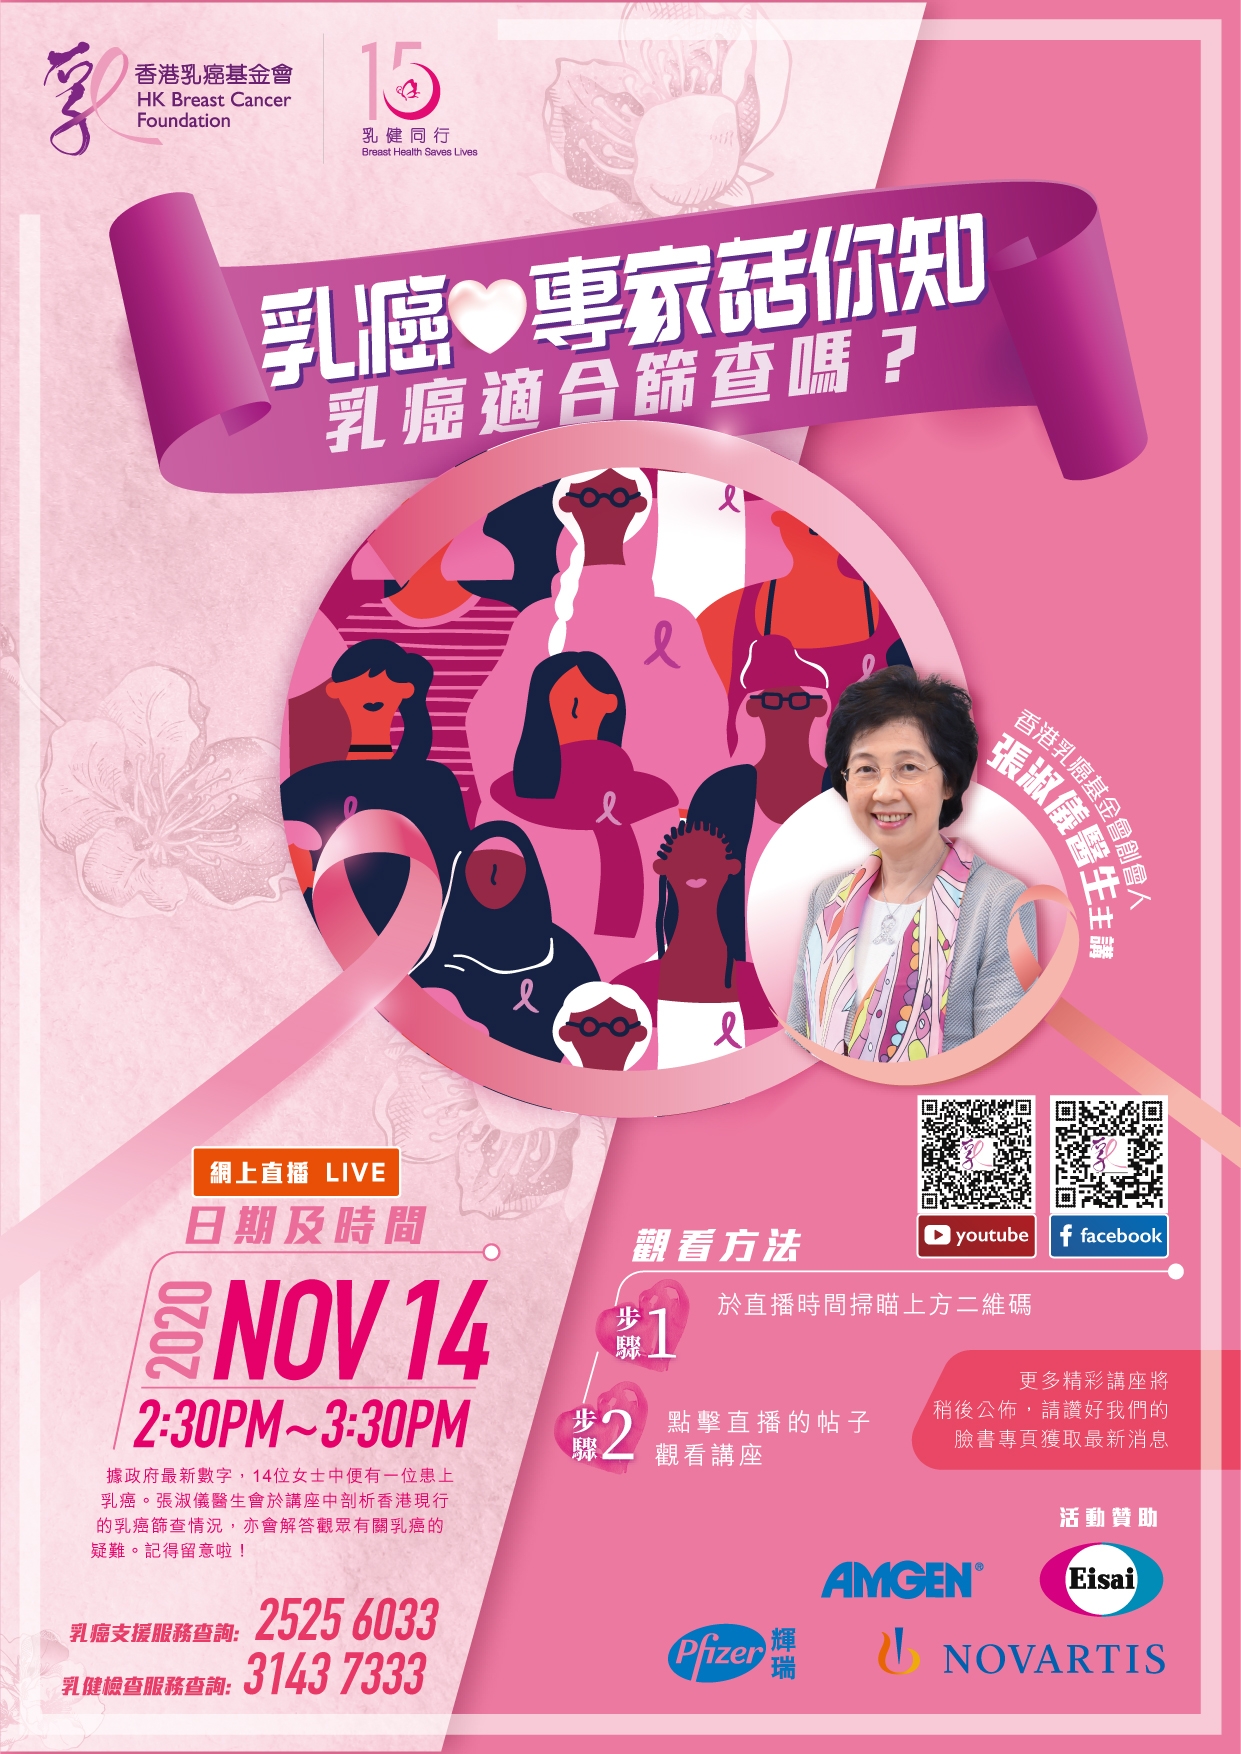 Self Photos / Files - HKBCF Facebook Live Talk1_Poster_20201030